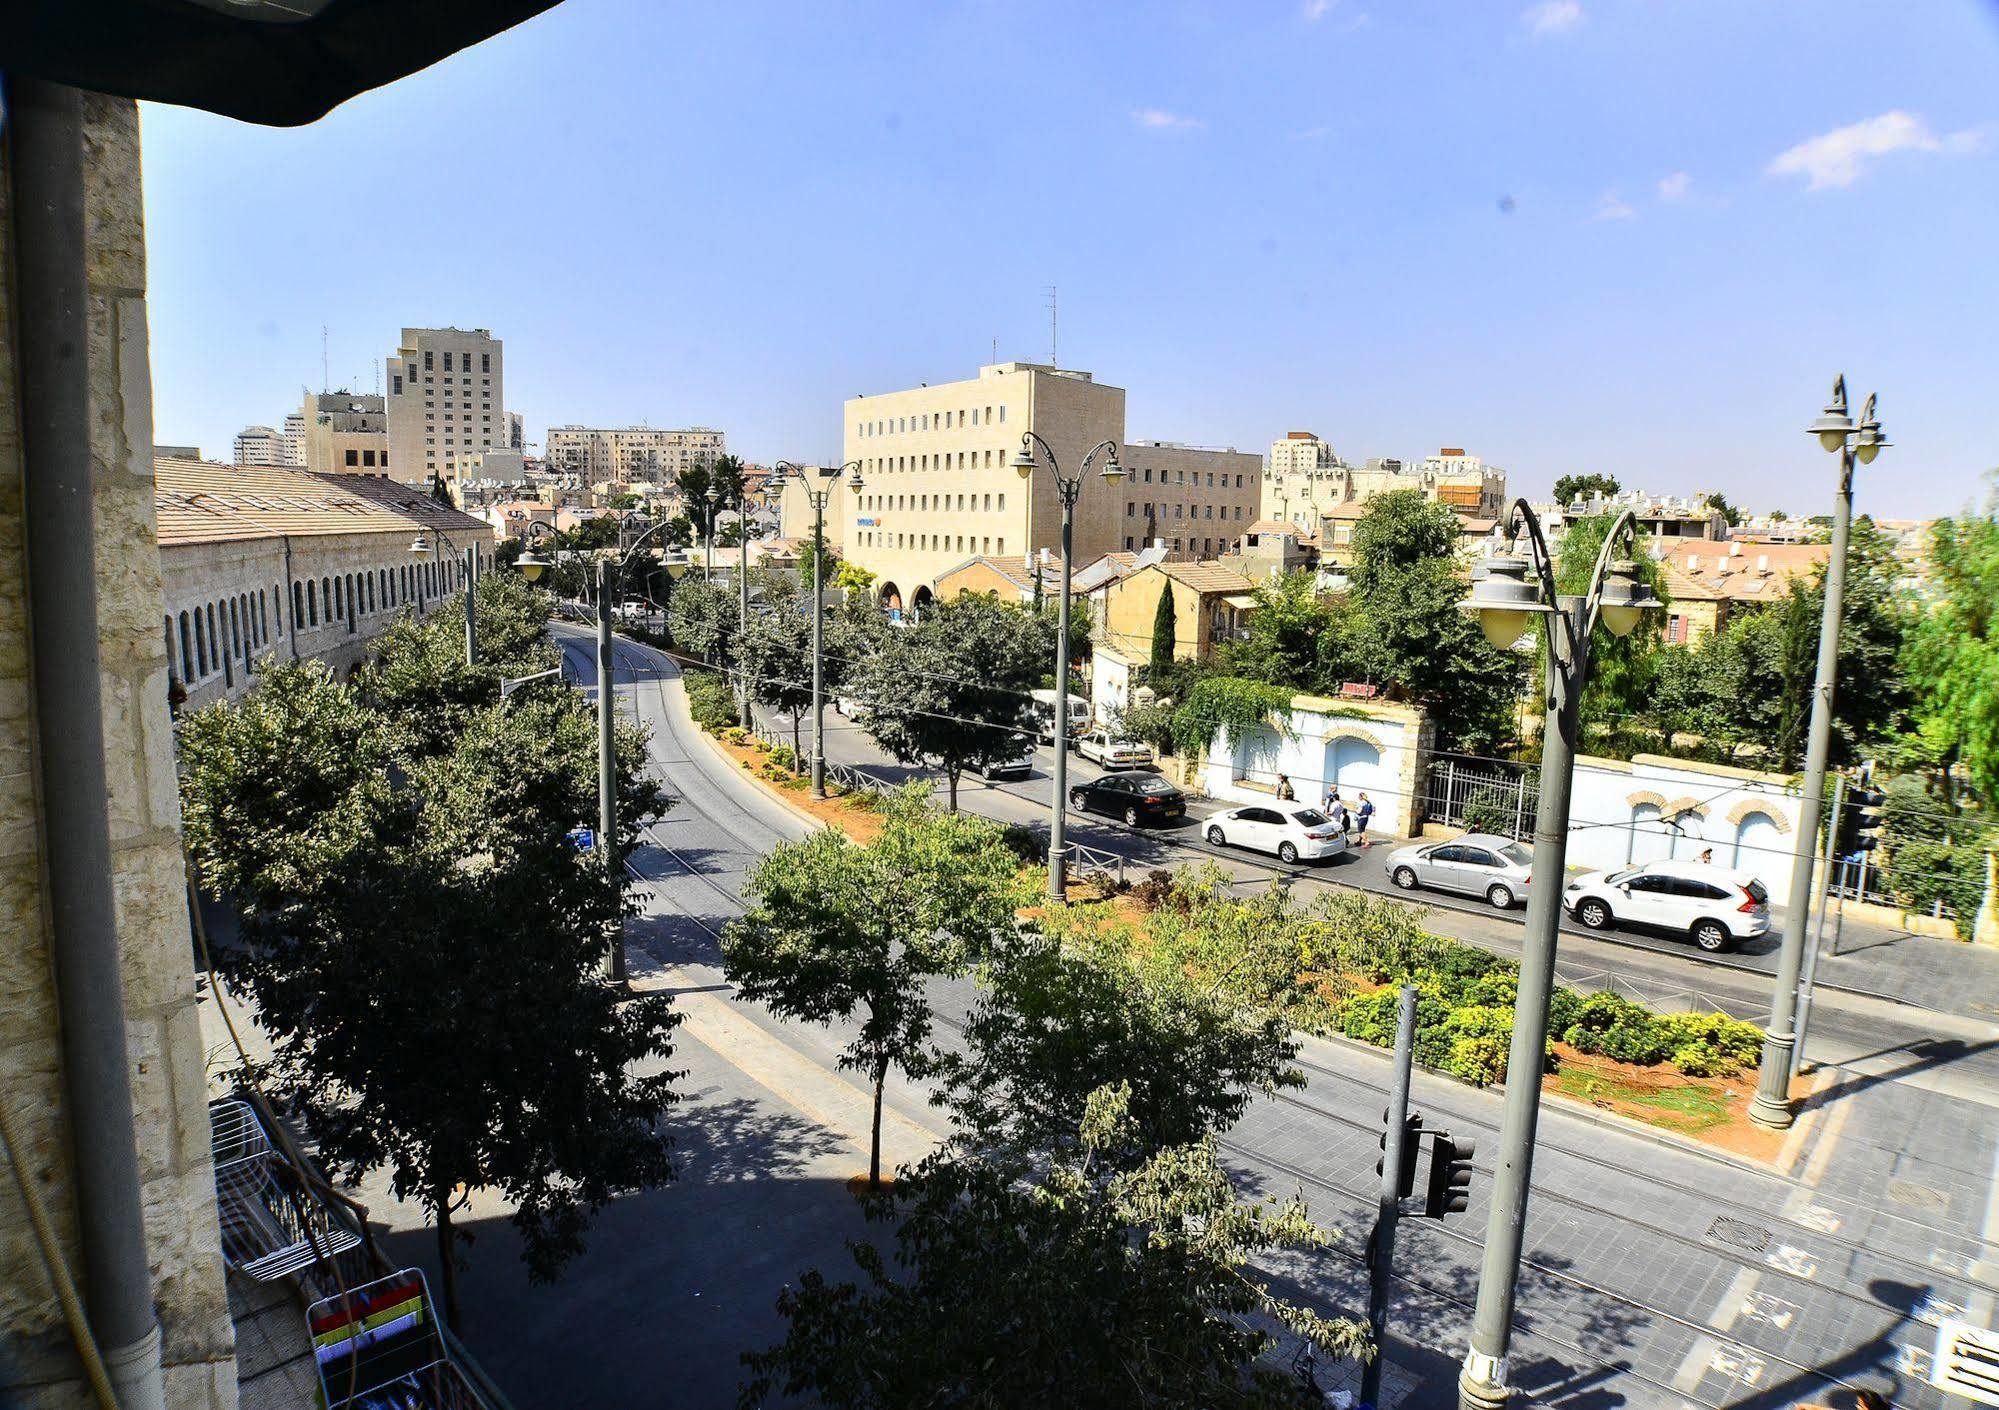 Avital Hotel Jerusalem Exterior photo